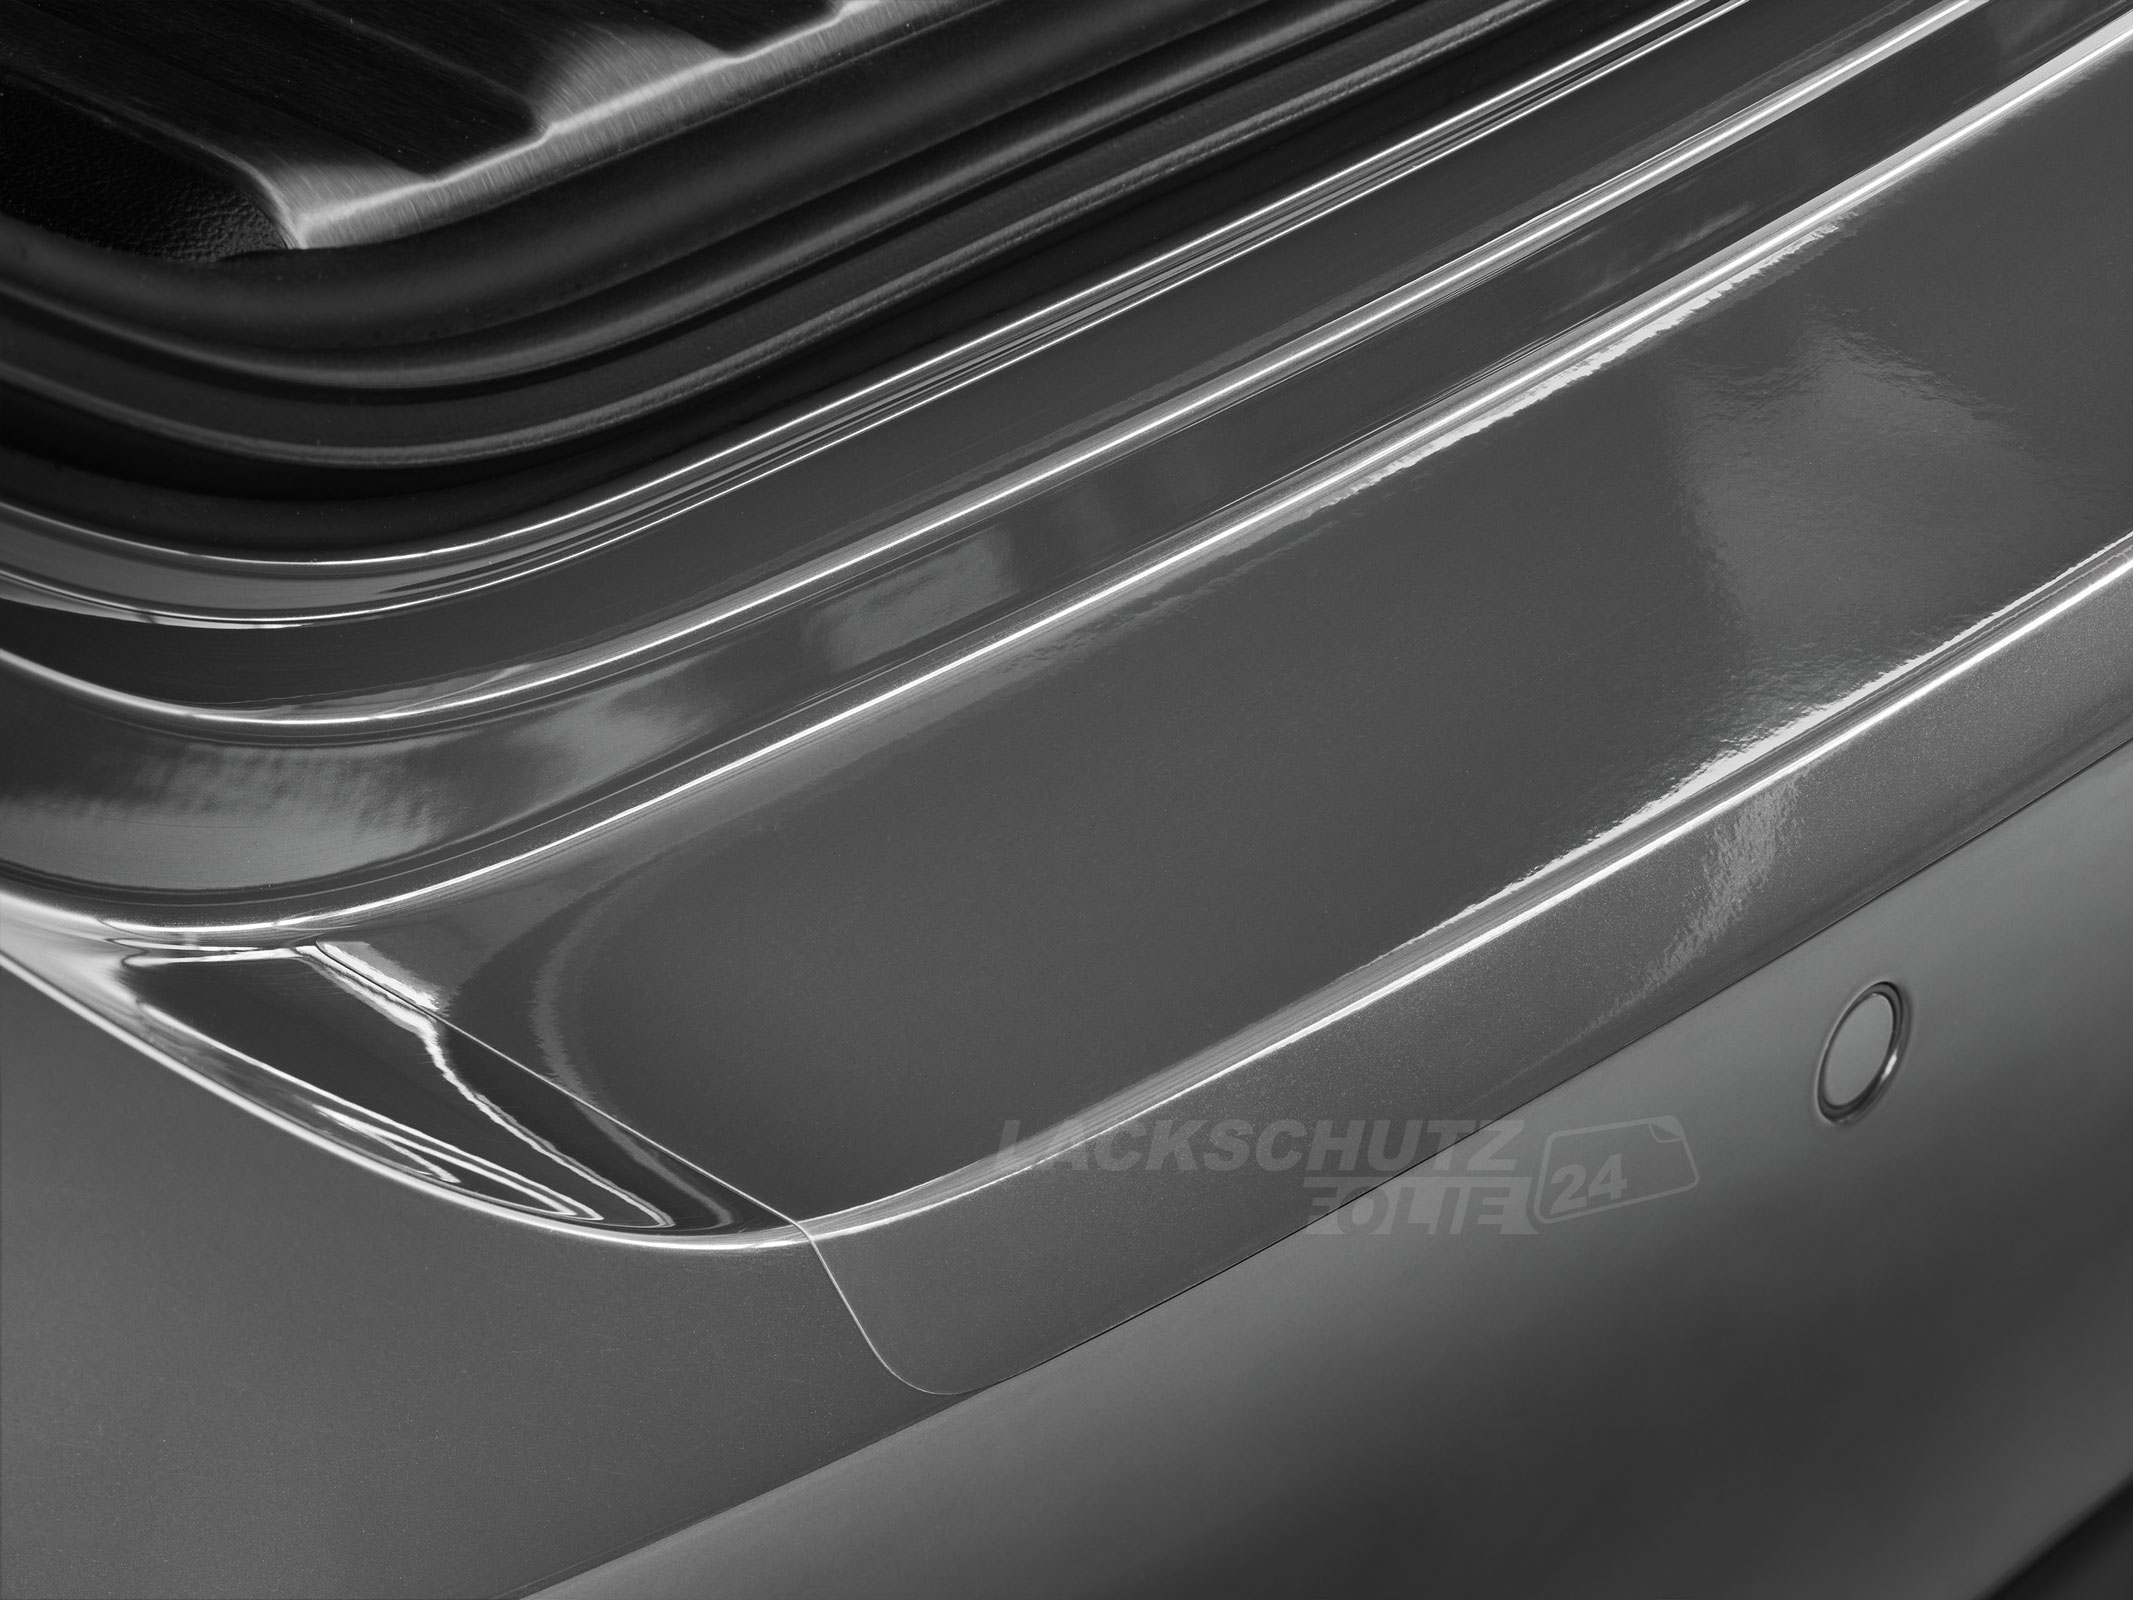 Ladekantenschutzfolie - Transparent Glatt Hochglänzend 150 µm stark für Alfa Romeo 159 Limousine, BJ 2005-2011